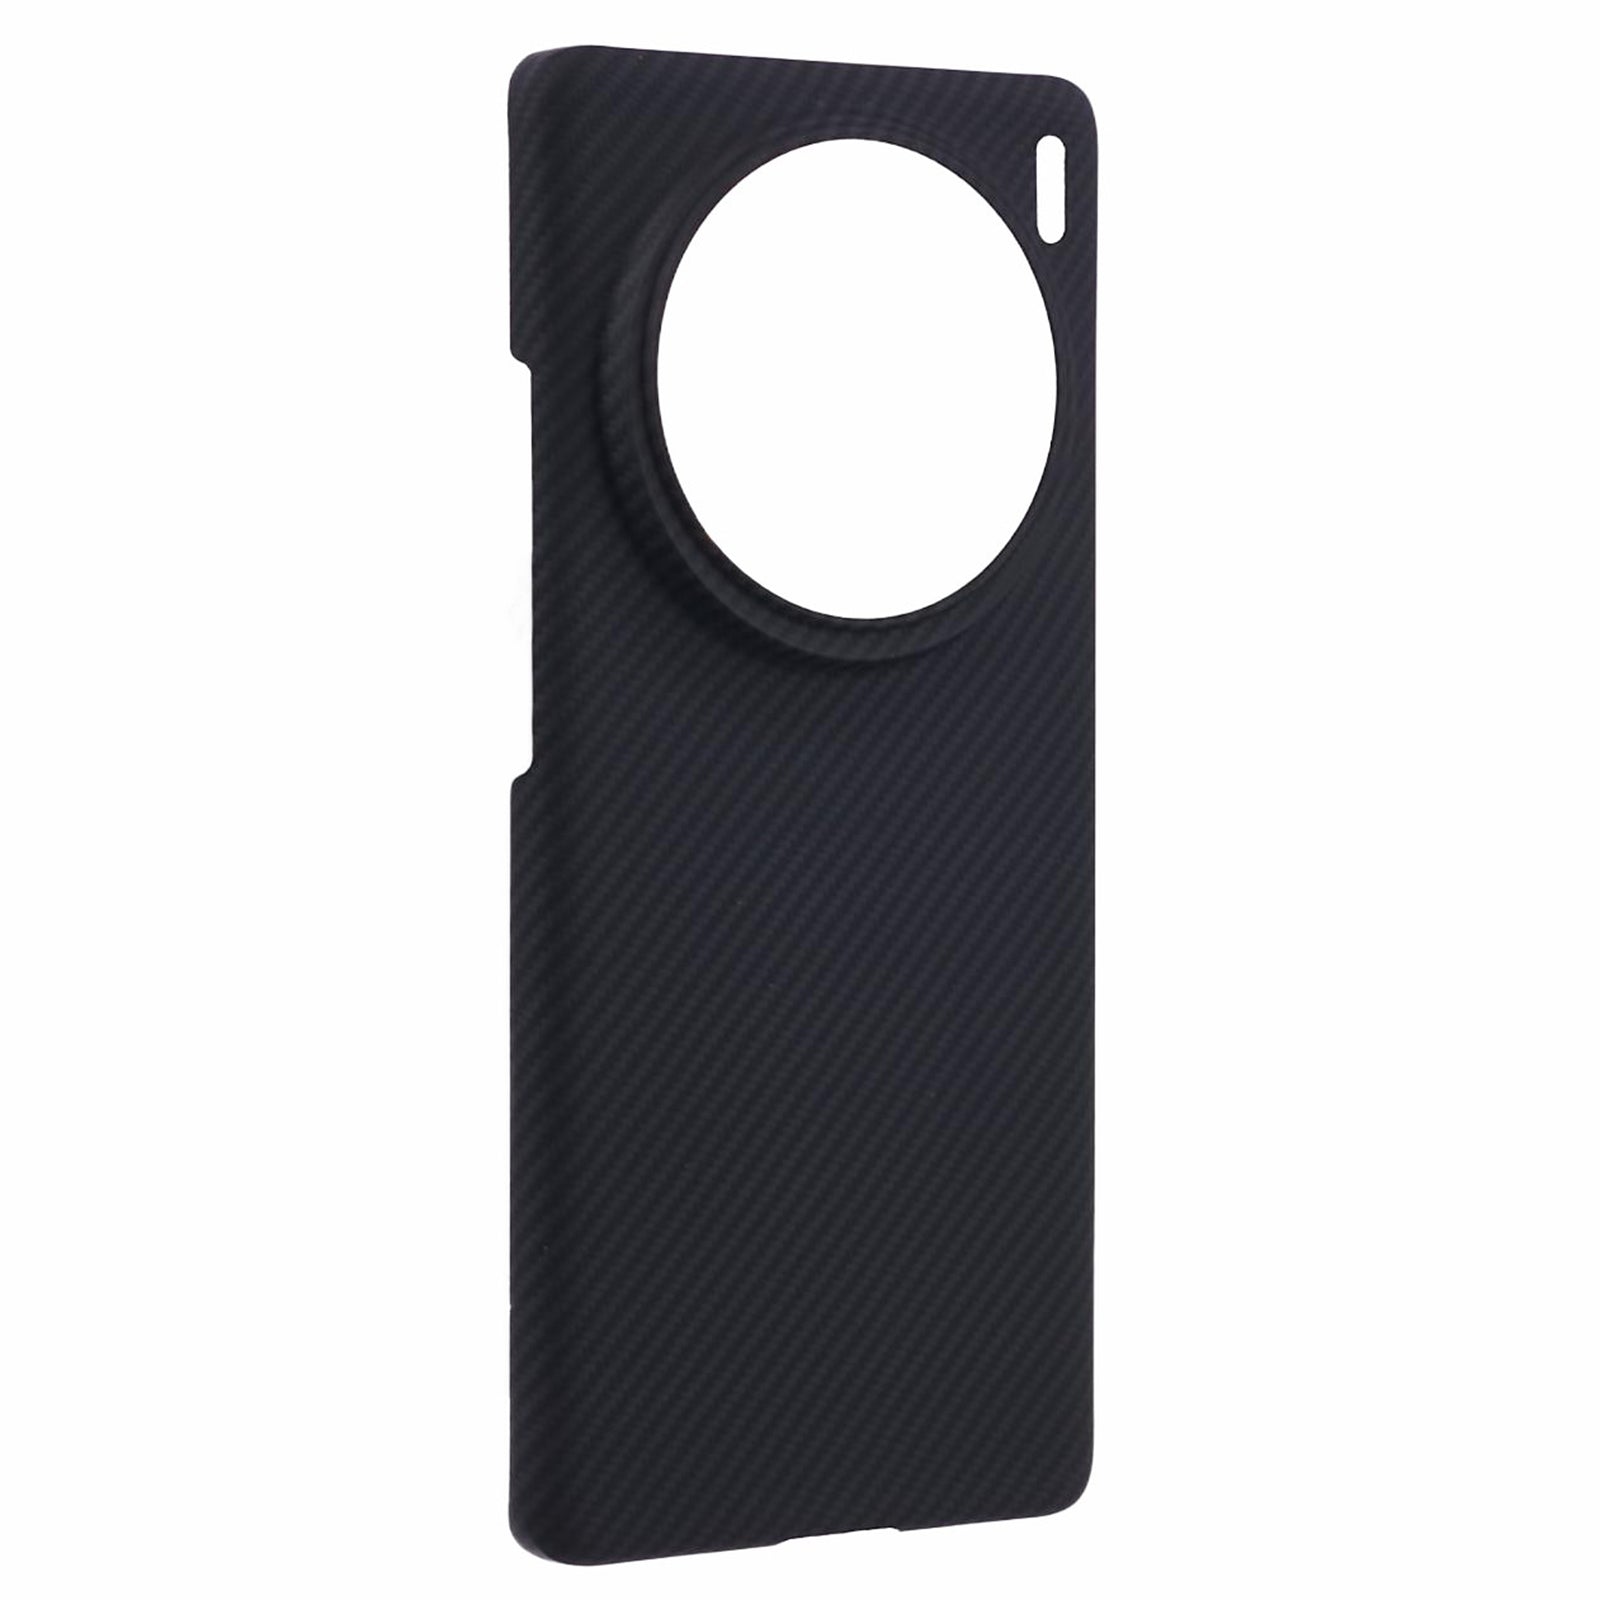 For 	vivo X100 Pro 5G Cell Phone Case 600D Fine Textured Aramid Fiber Big Lens Cutout Black Shell